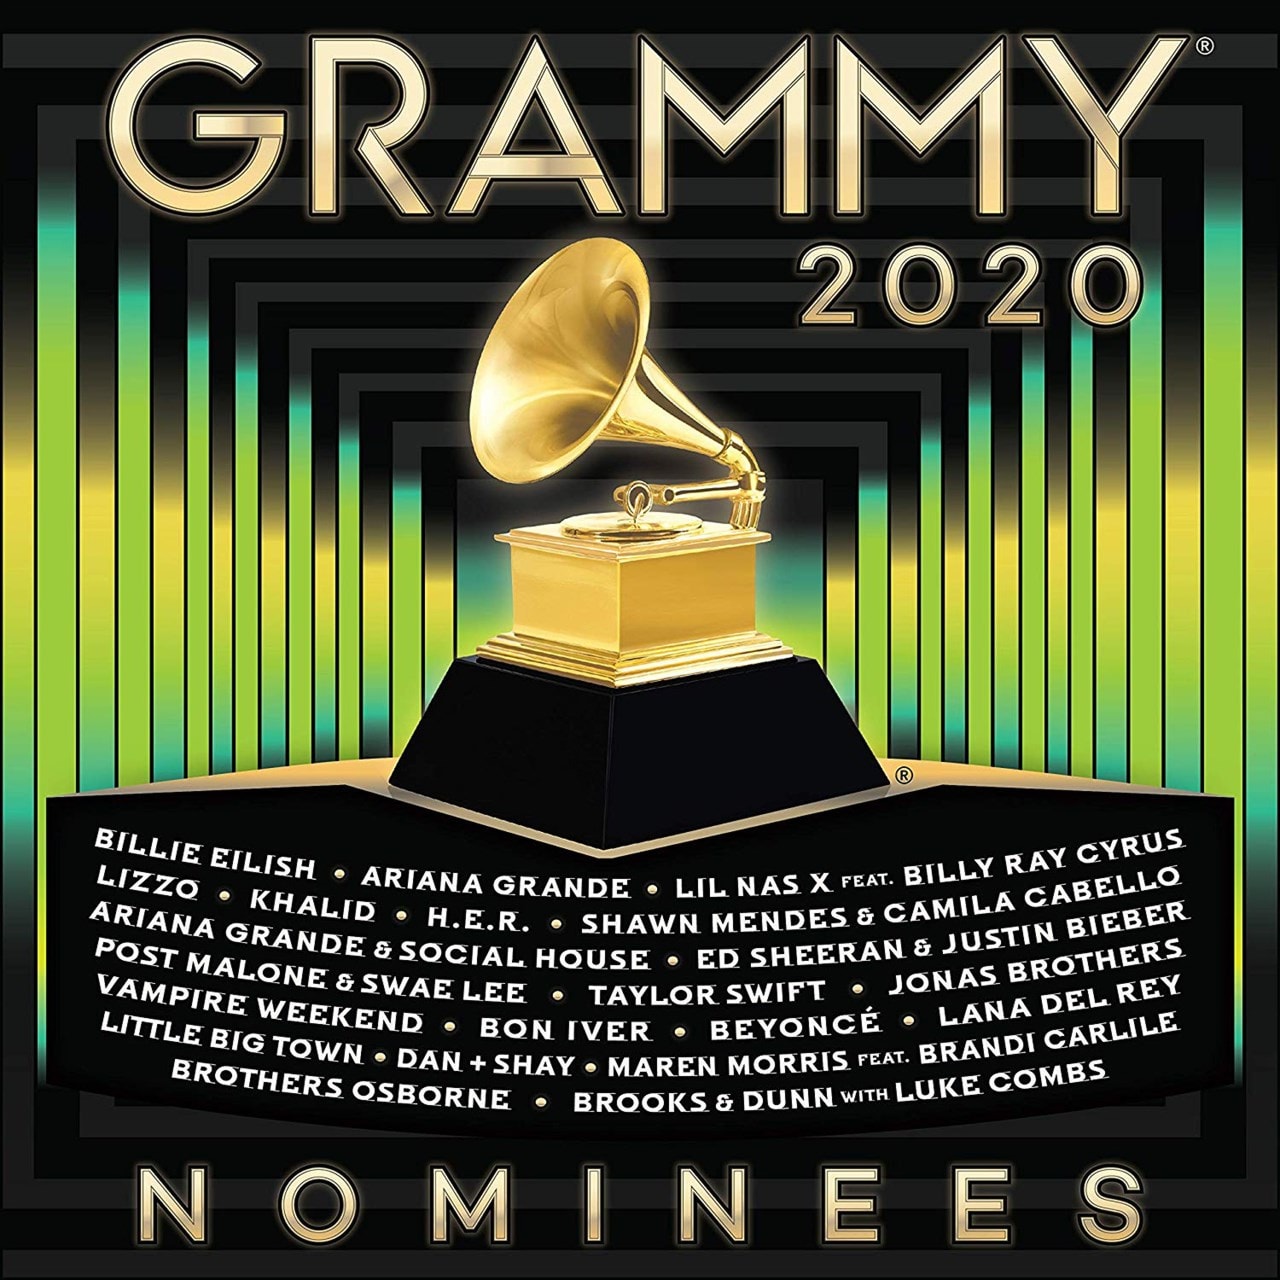 Grammy 2020 Nominees CD Album Free shipping over £20 HMV Store